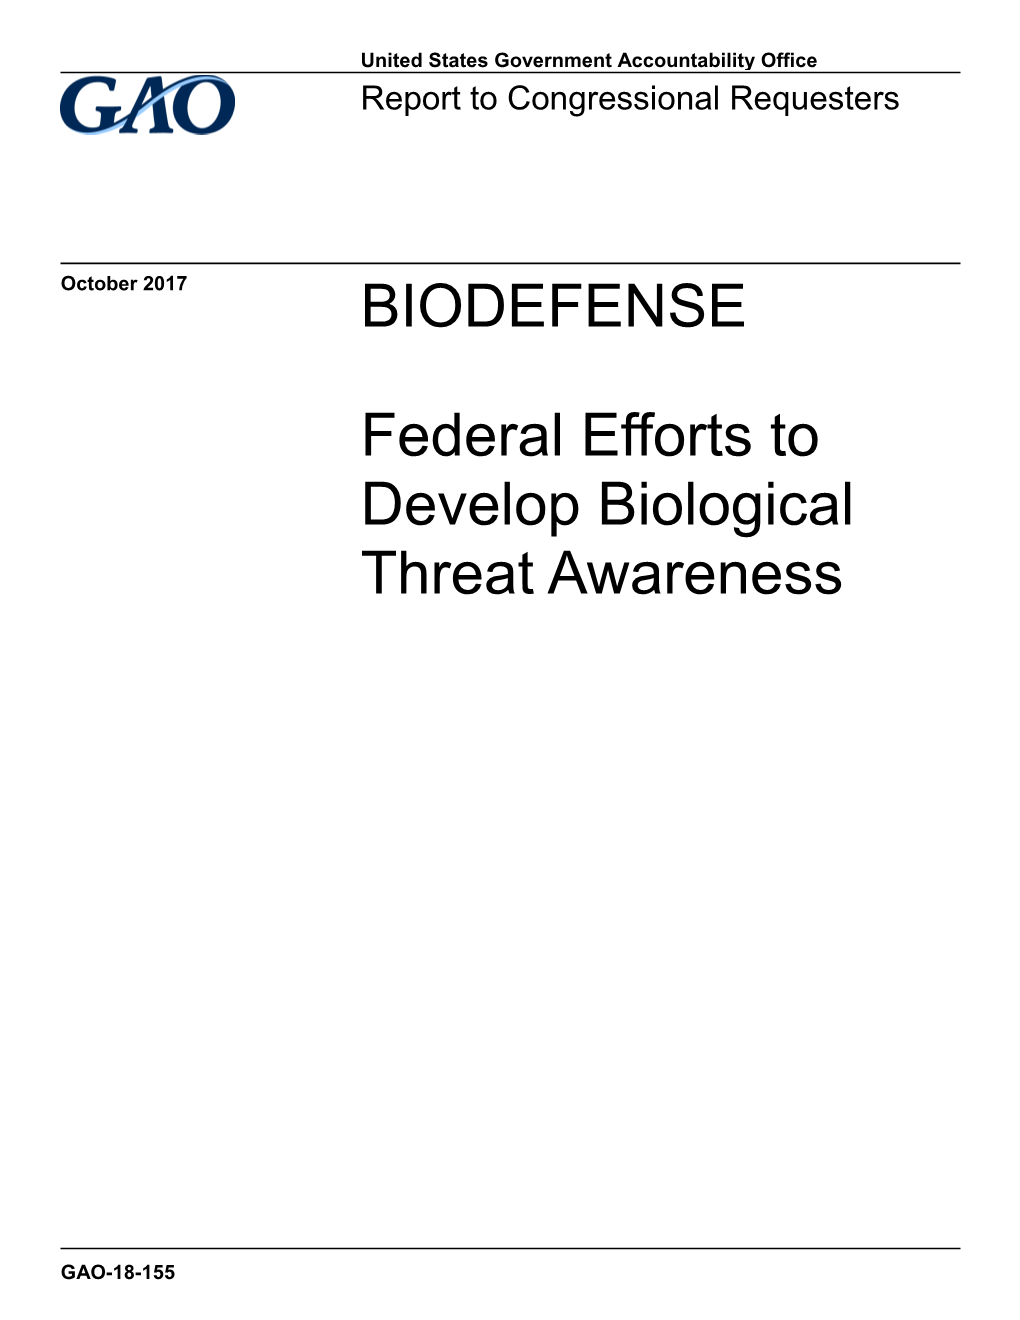 BIODEFENSE Federal Efforts to Develop Biological Threat Awareness